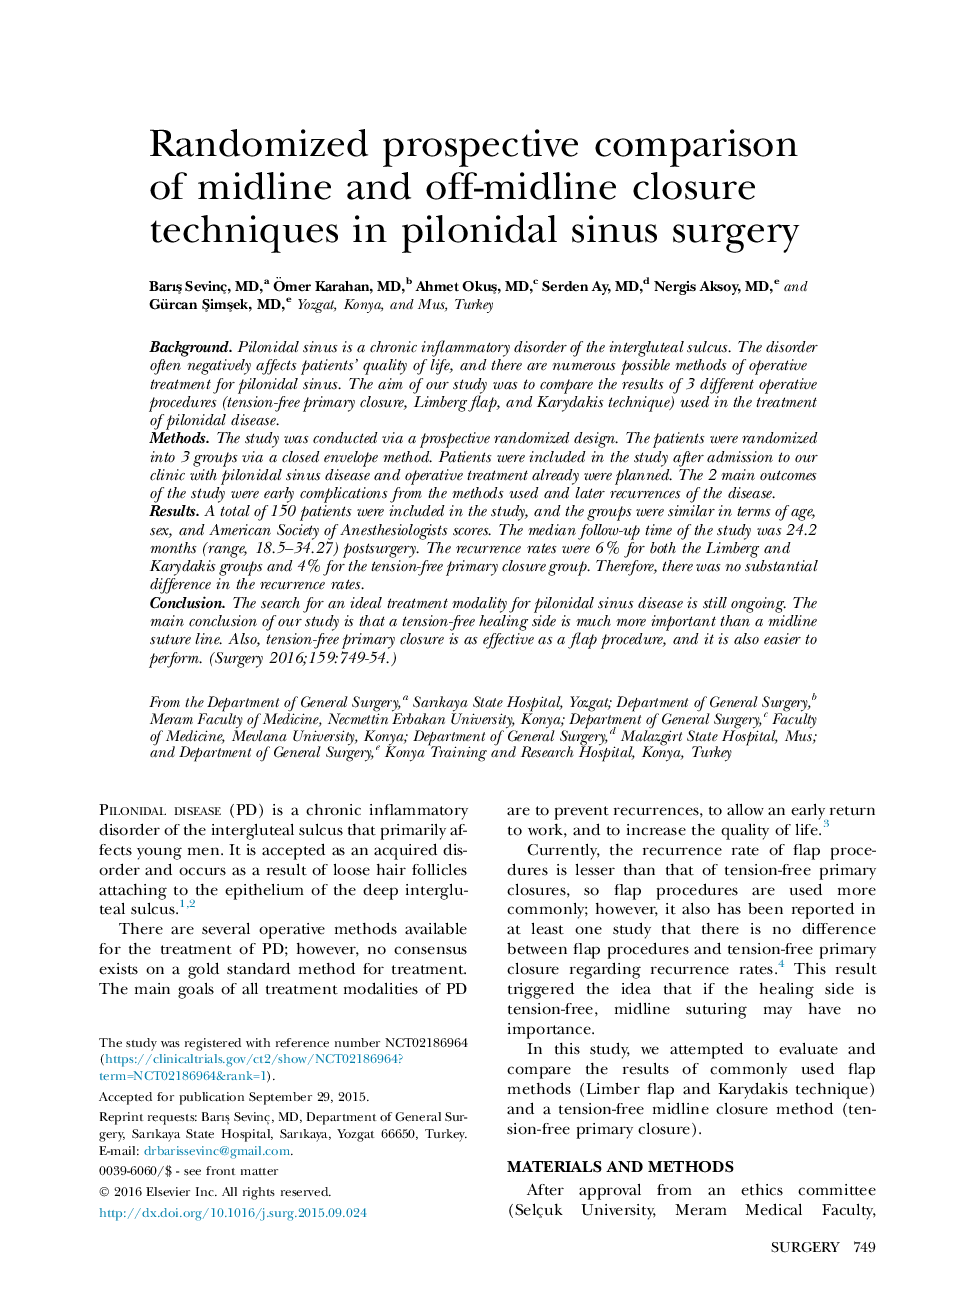 Randomized prospective comparison of midline and off-midline closure techniques in pilonidal sinus surgery 